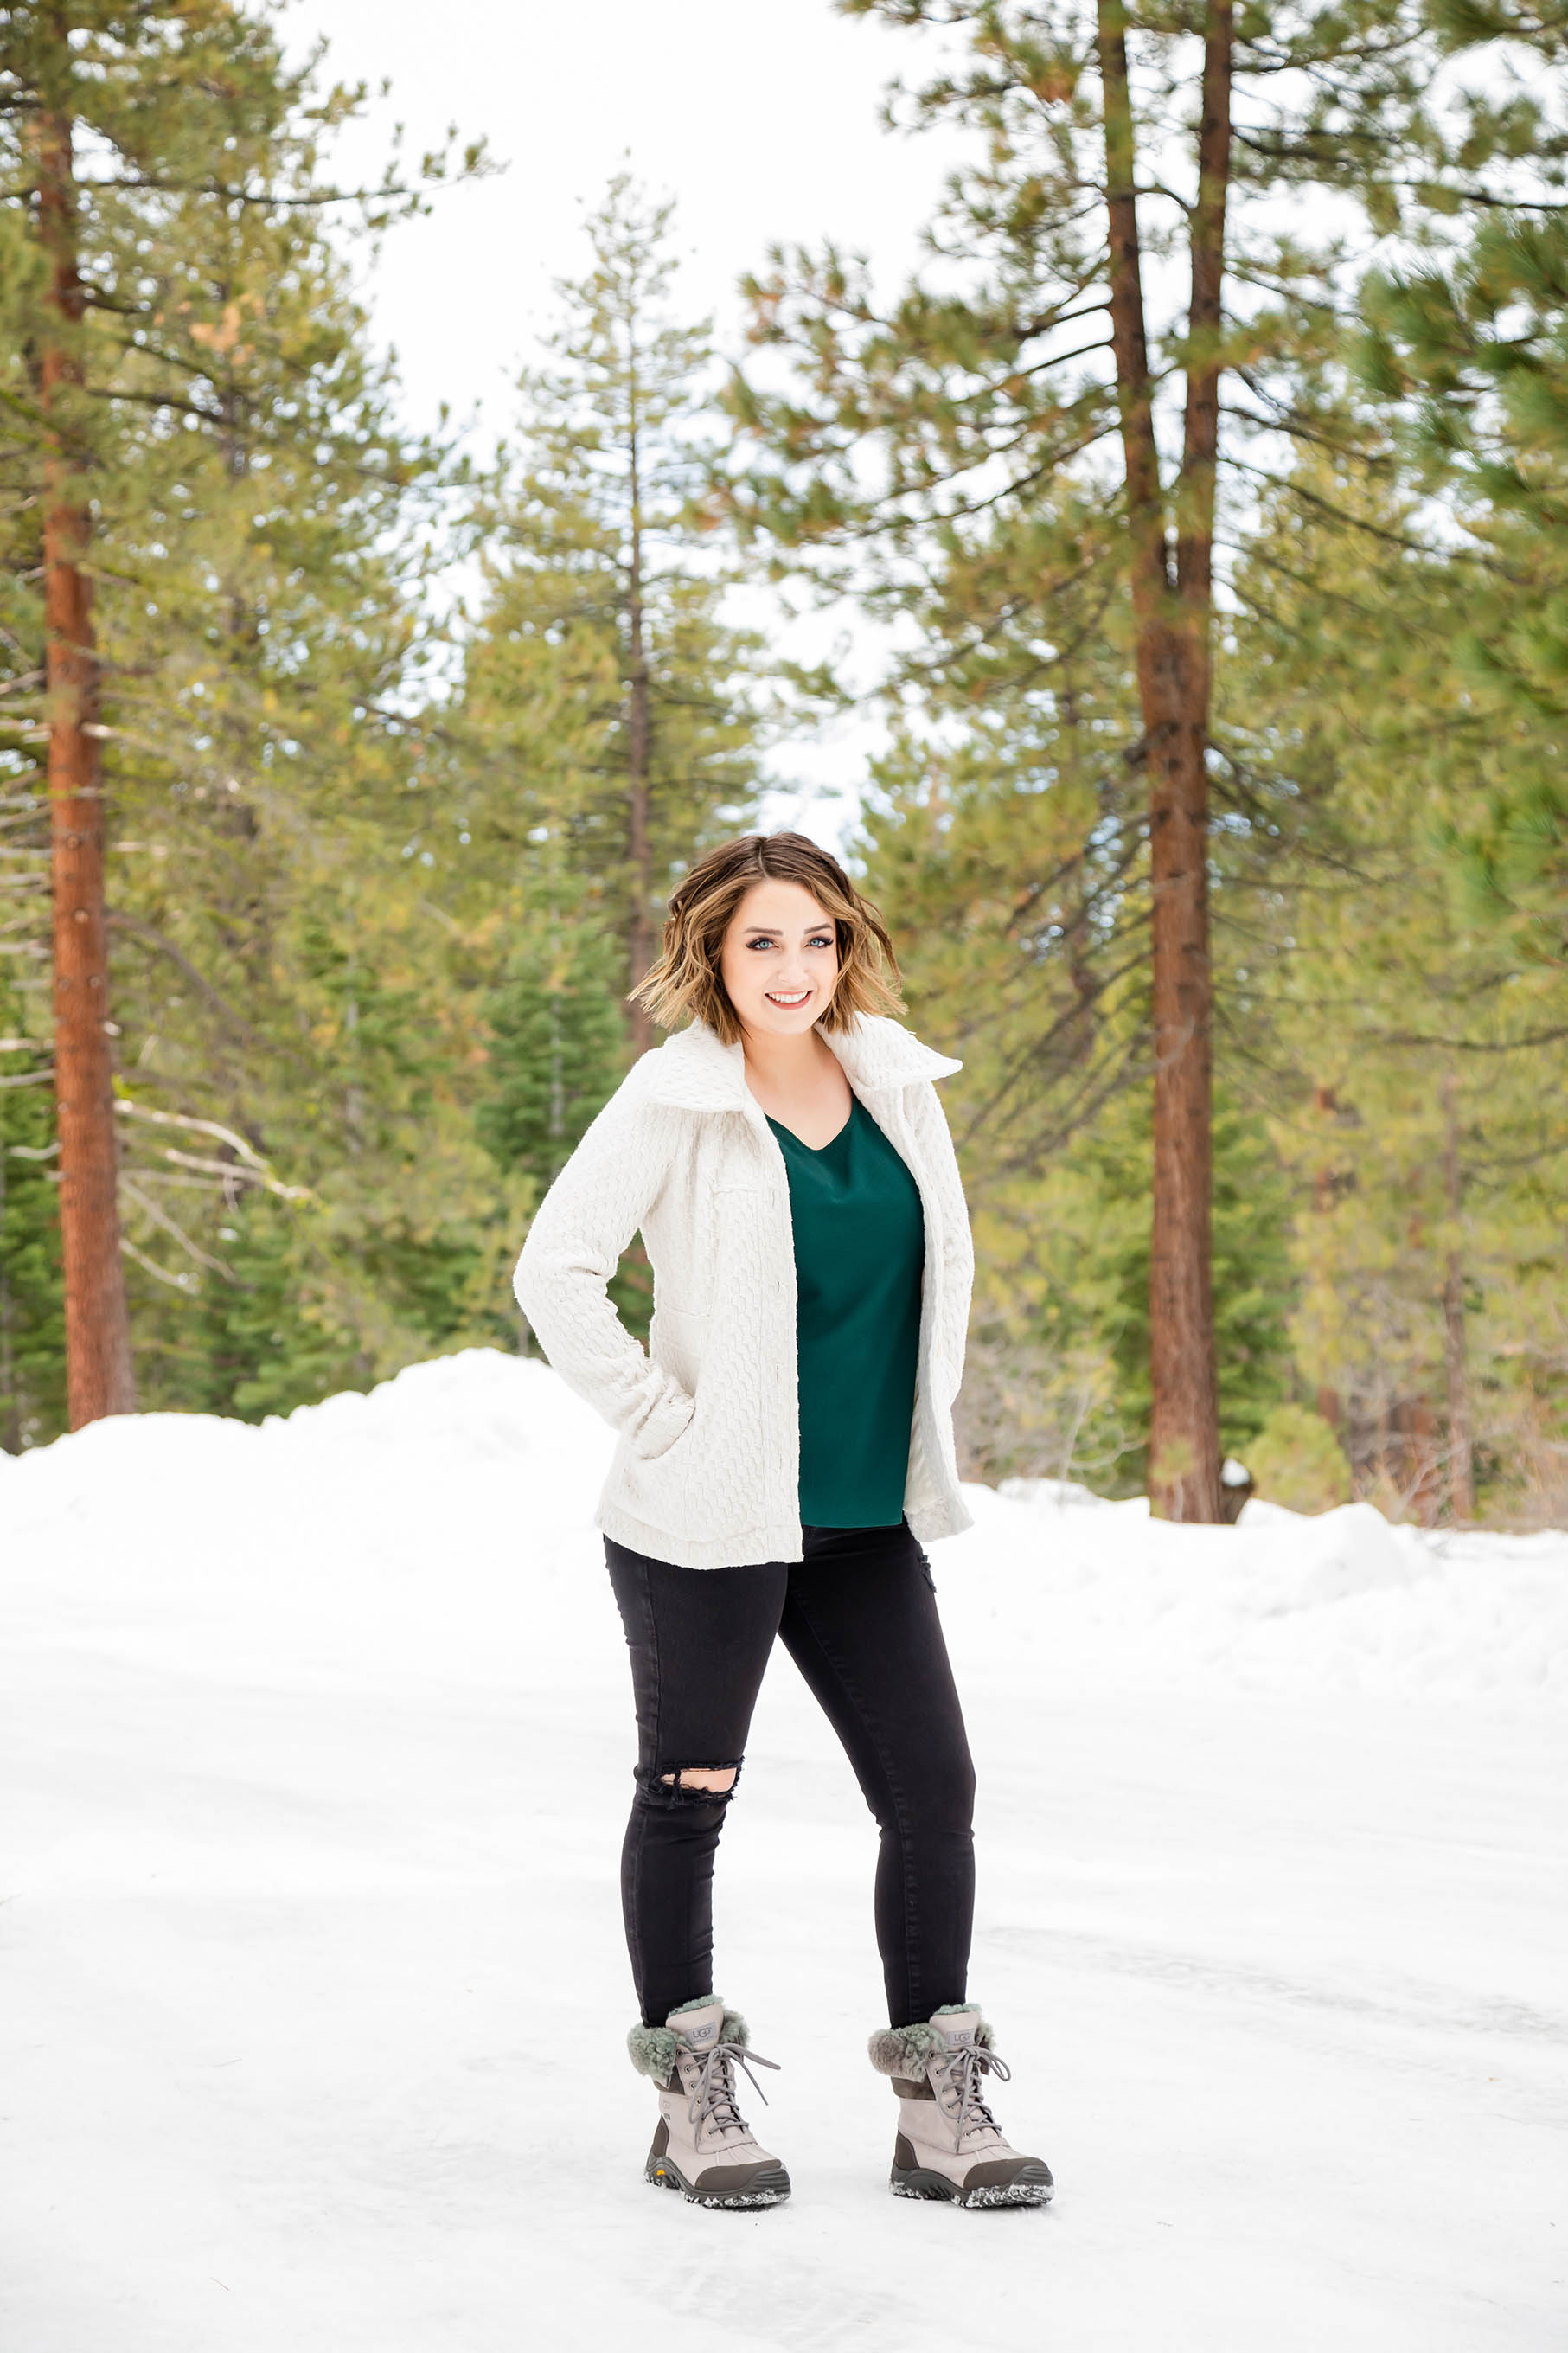 Caitlin Mcaninch – Adventure blogger at Escape Reno